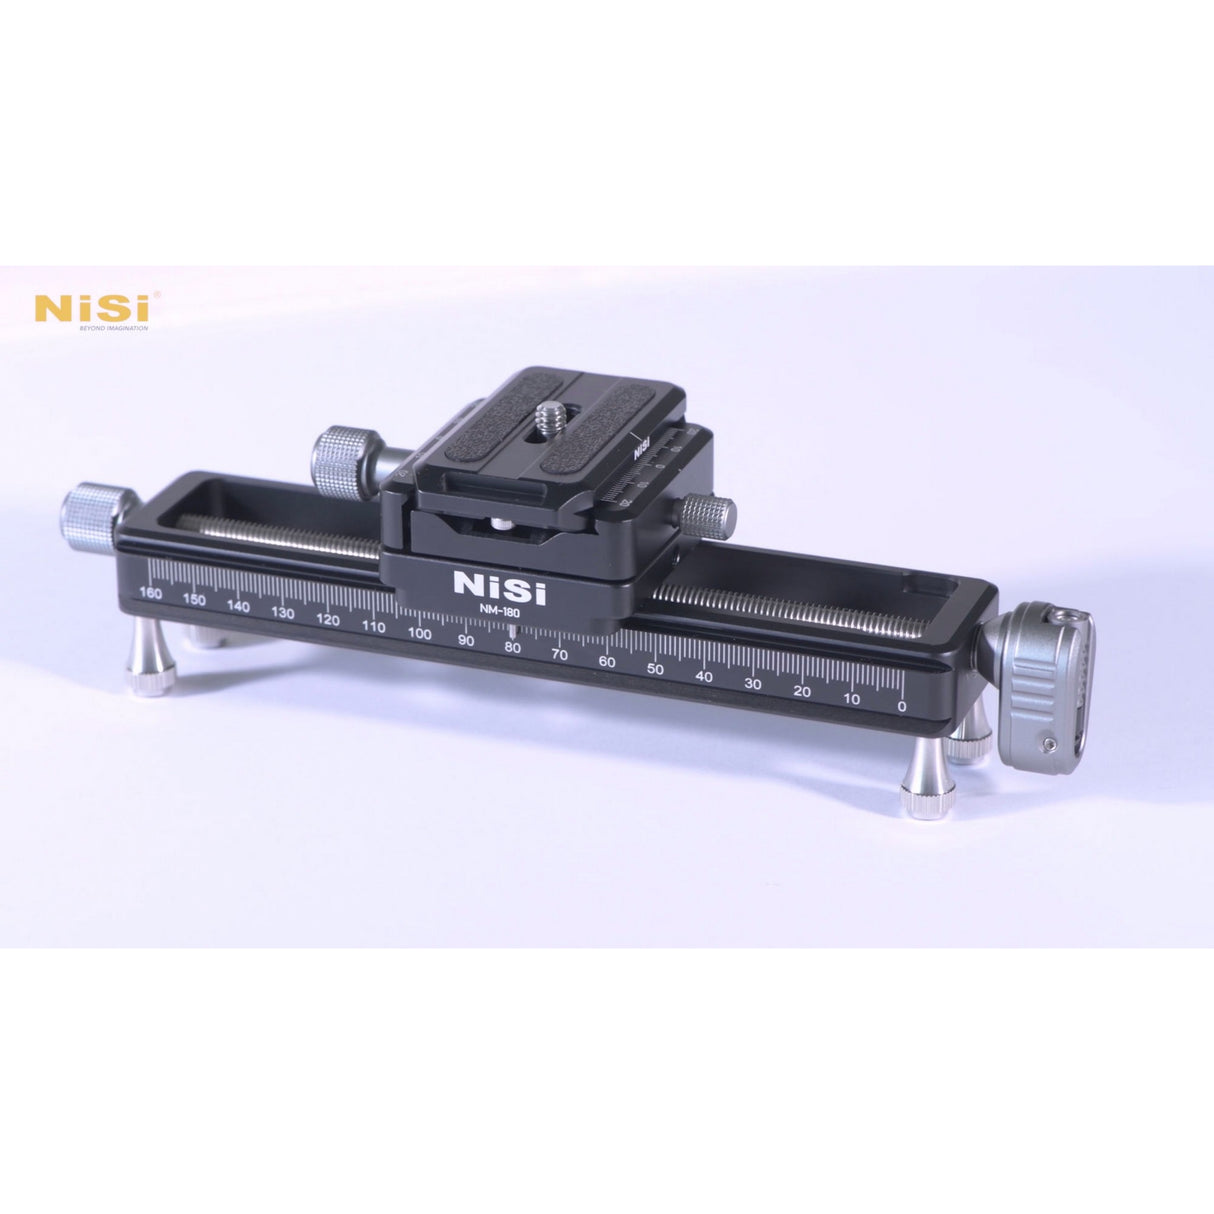 NiSi NM-180 Macro Focusing Rail with 360-Degree Rotating Clamp